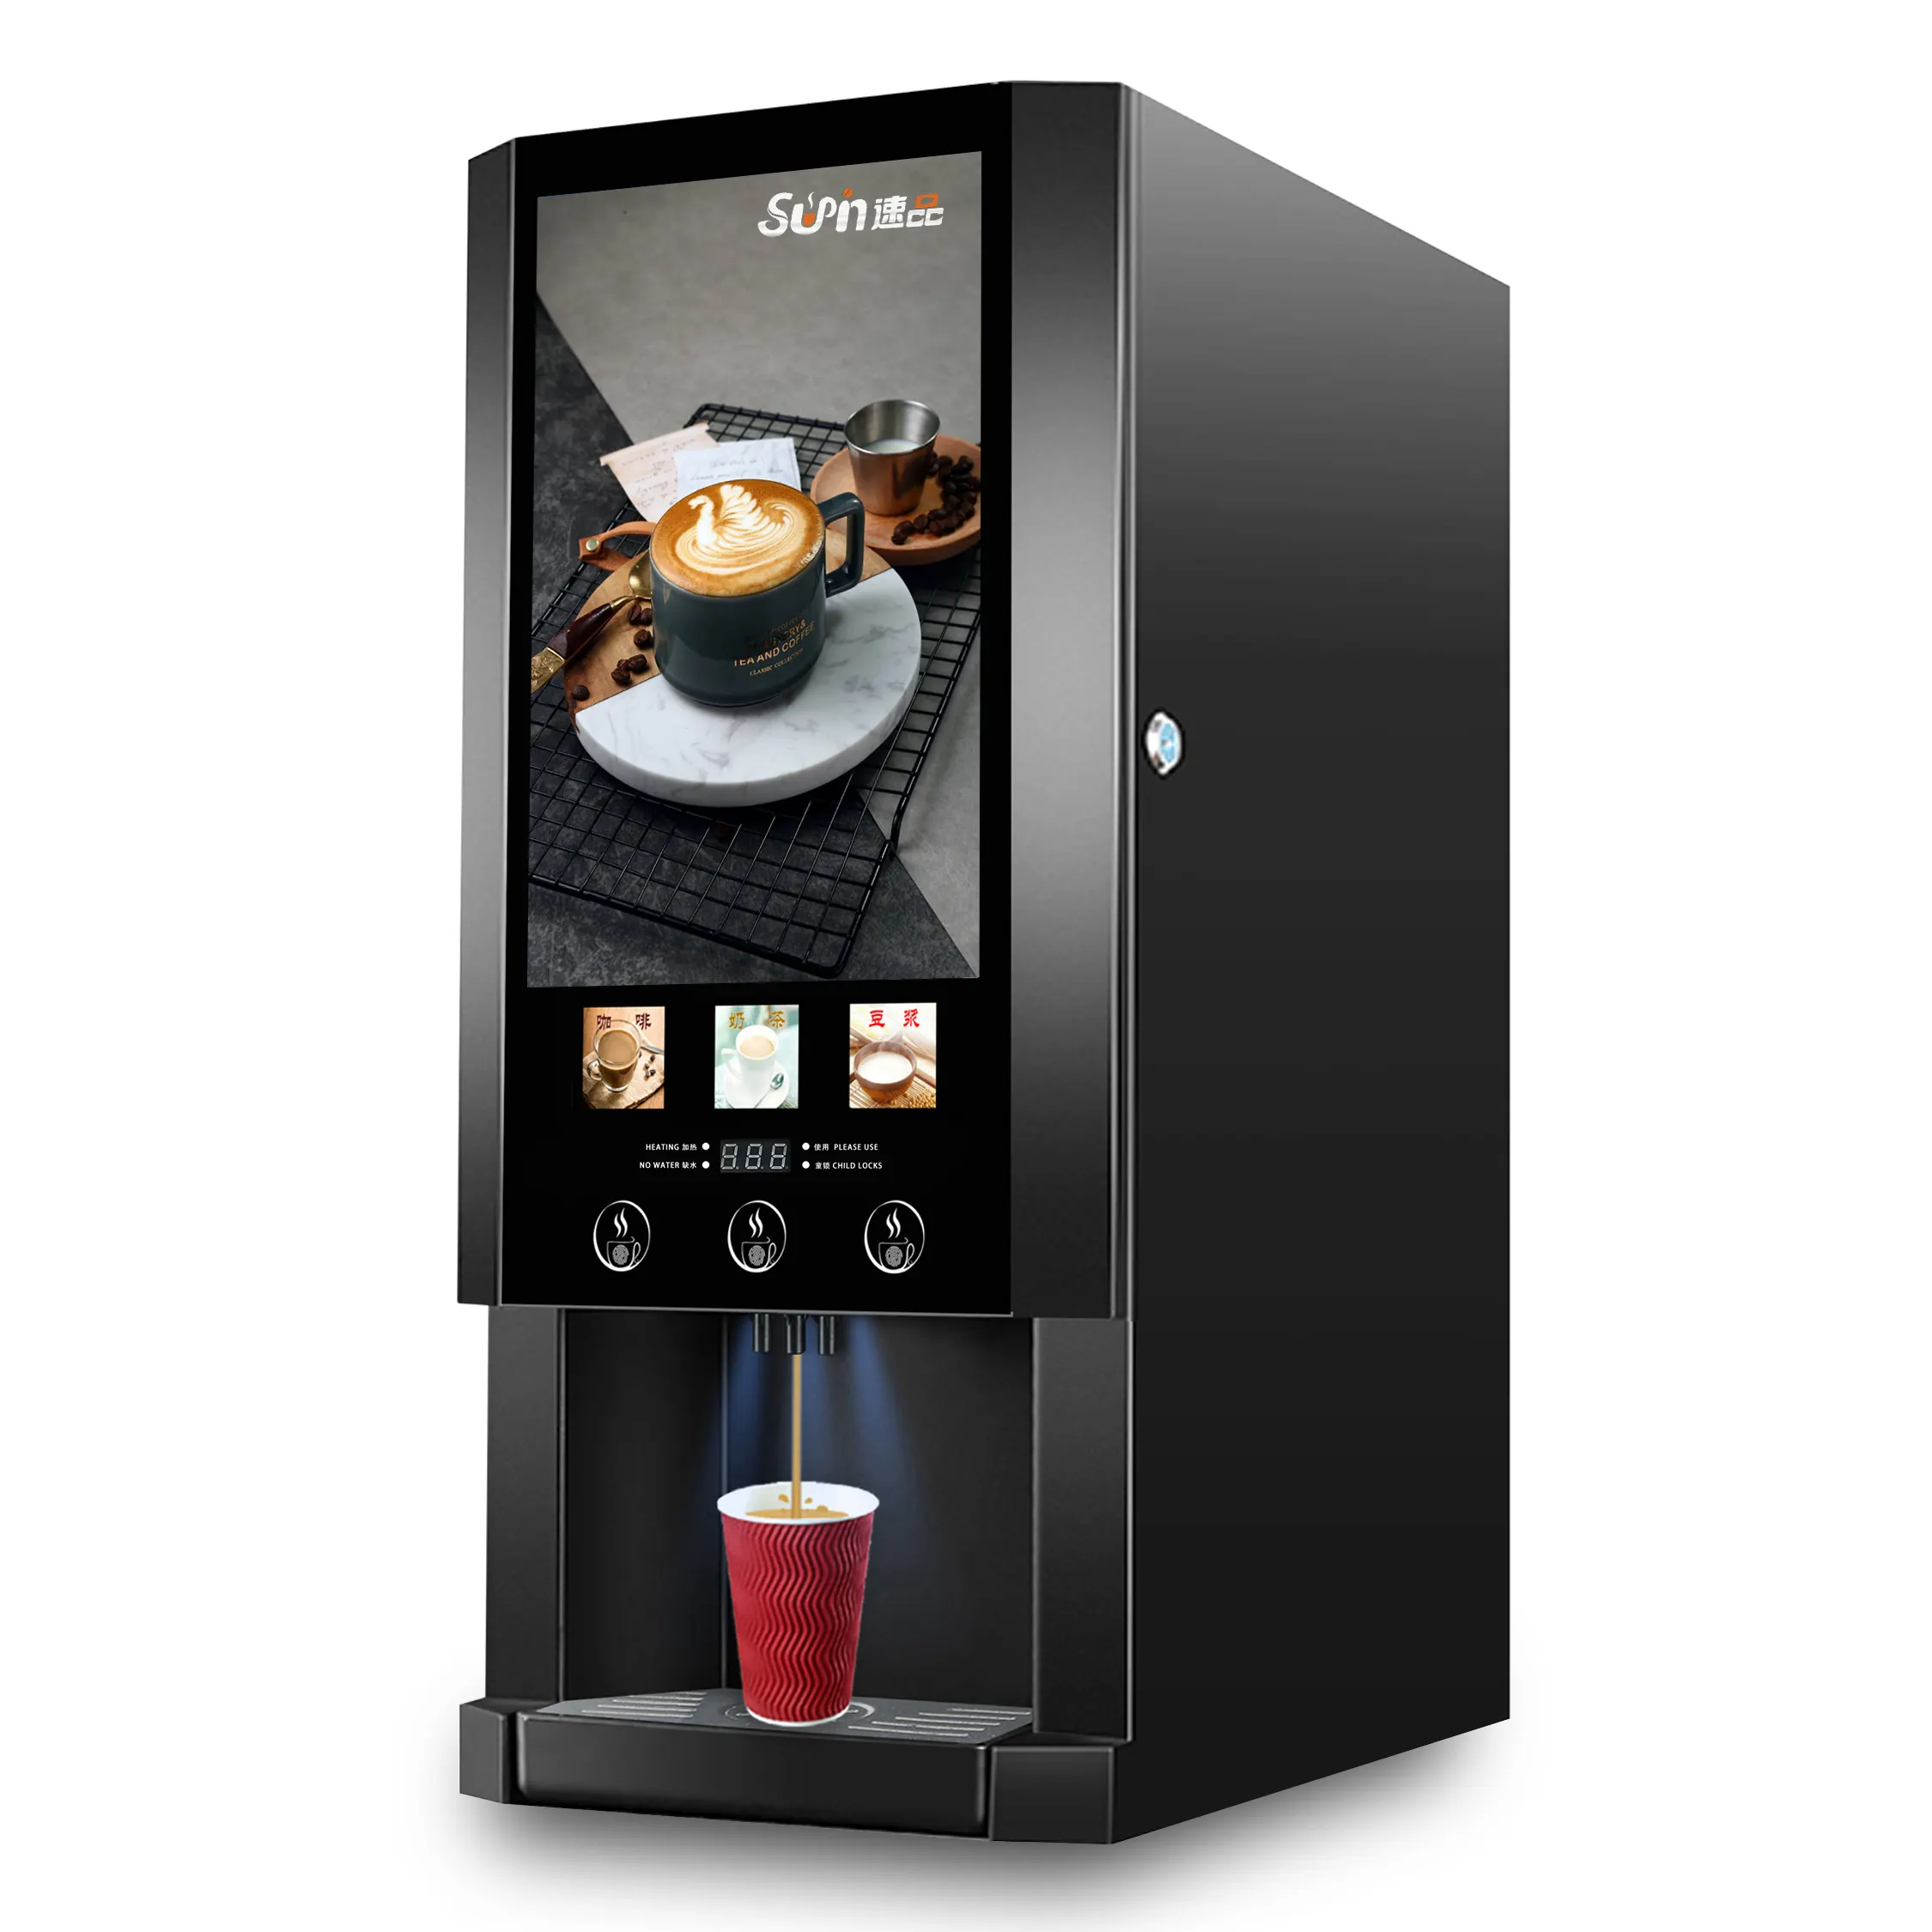 E-30S öffentliche Kaffee maschine kommerziell Wirtschaft licher Instant kaffee automat Milch tee automat Kaffeesp ender